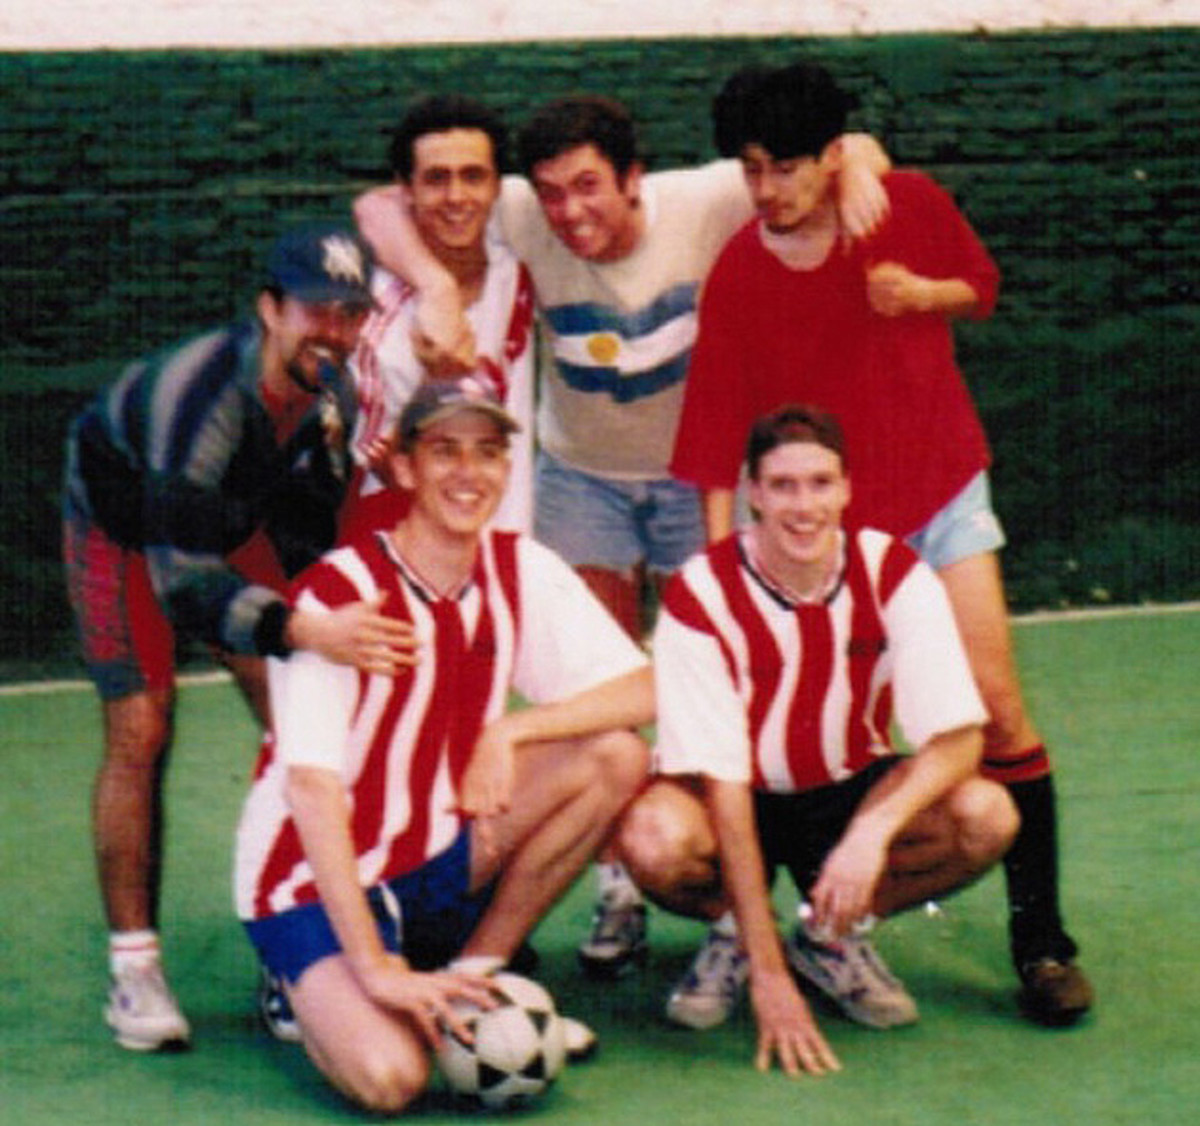 Standing (L to R): Diego El Blanco, Diego El Negro, Alejandro, Ricardo. Kneeling (L to R): Matt, Grant.